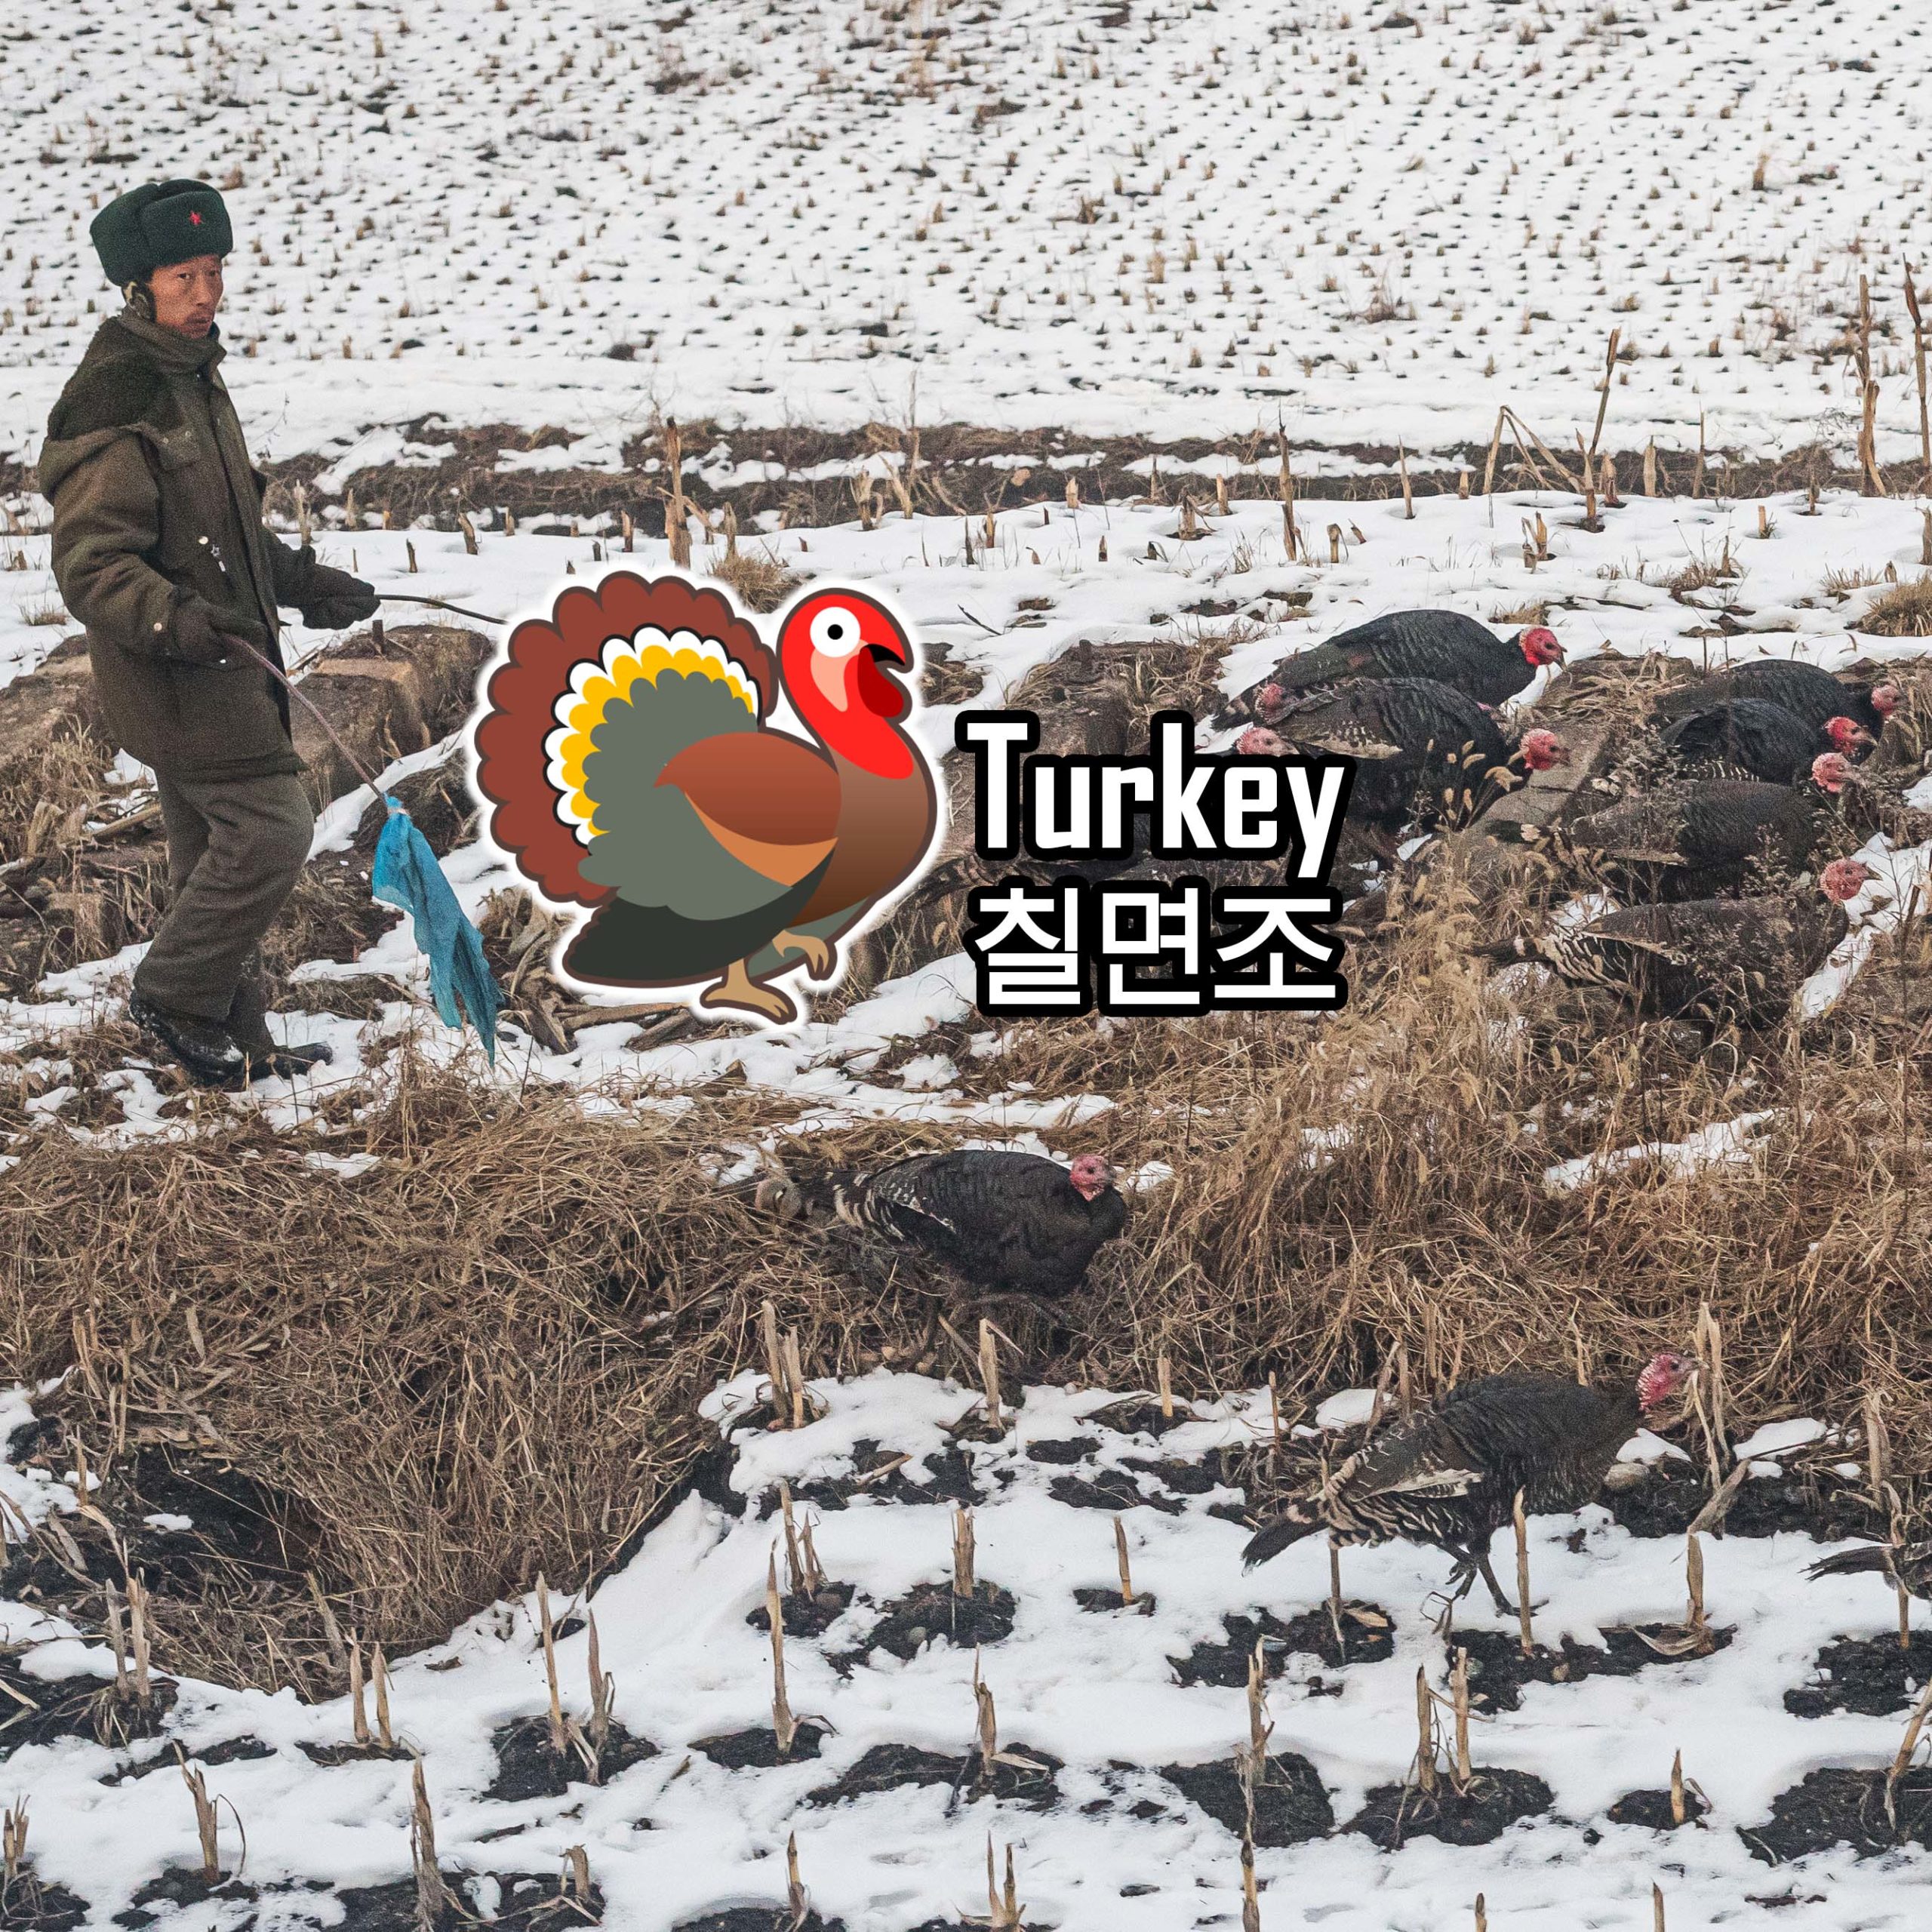 Turkeys, the alternative source of meat in North Korea.